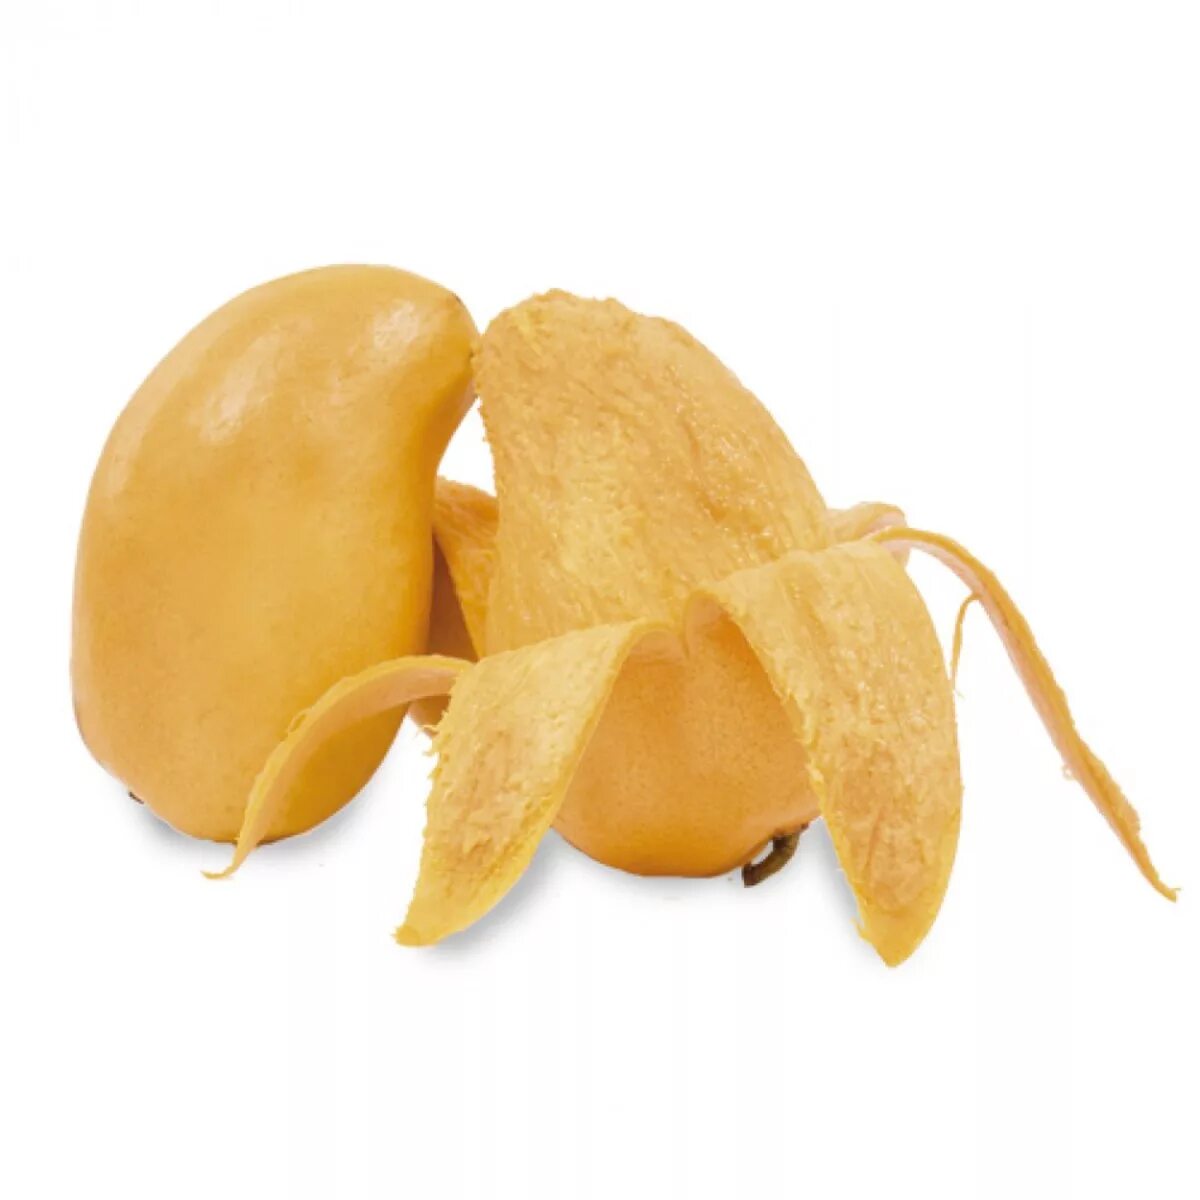 Кожица манго. Манго сорт Голд. Santorino манго. Манго 1кг Доминикана. Манго желтое.